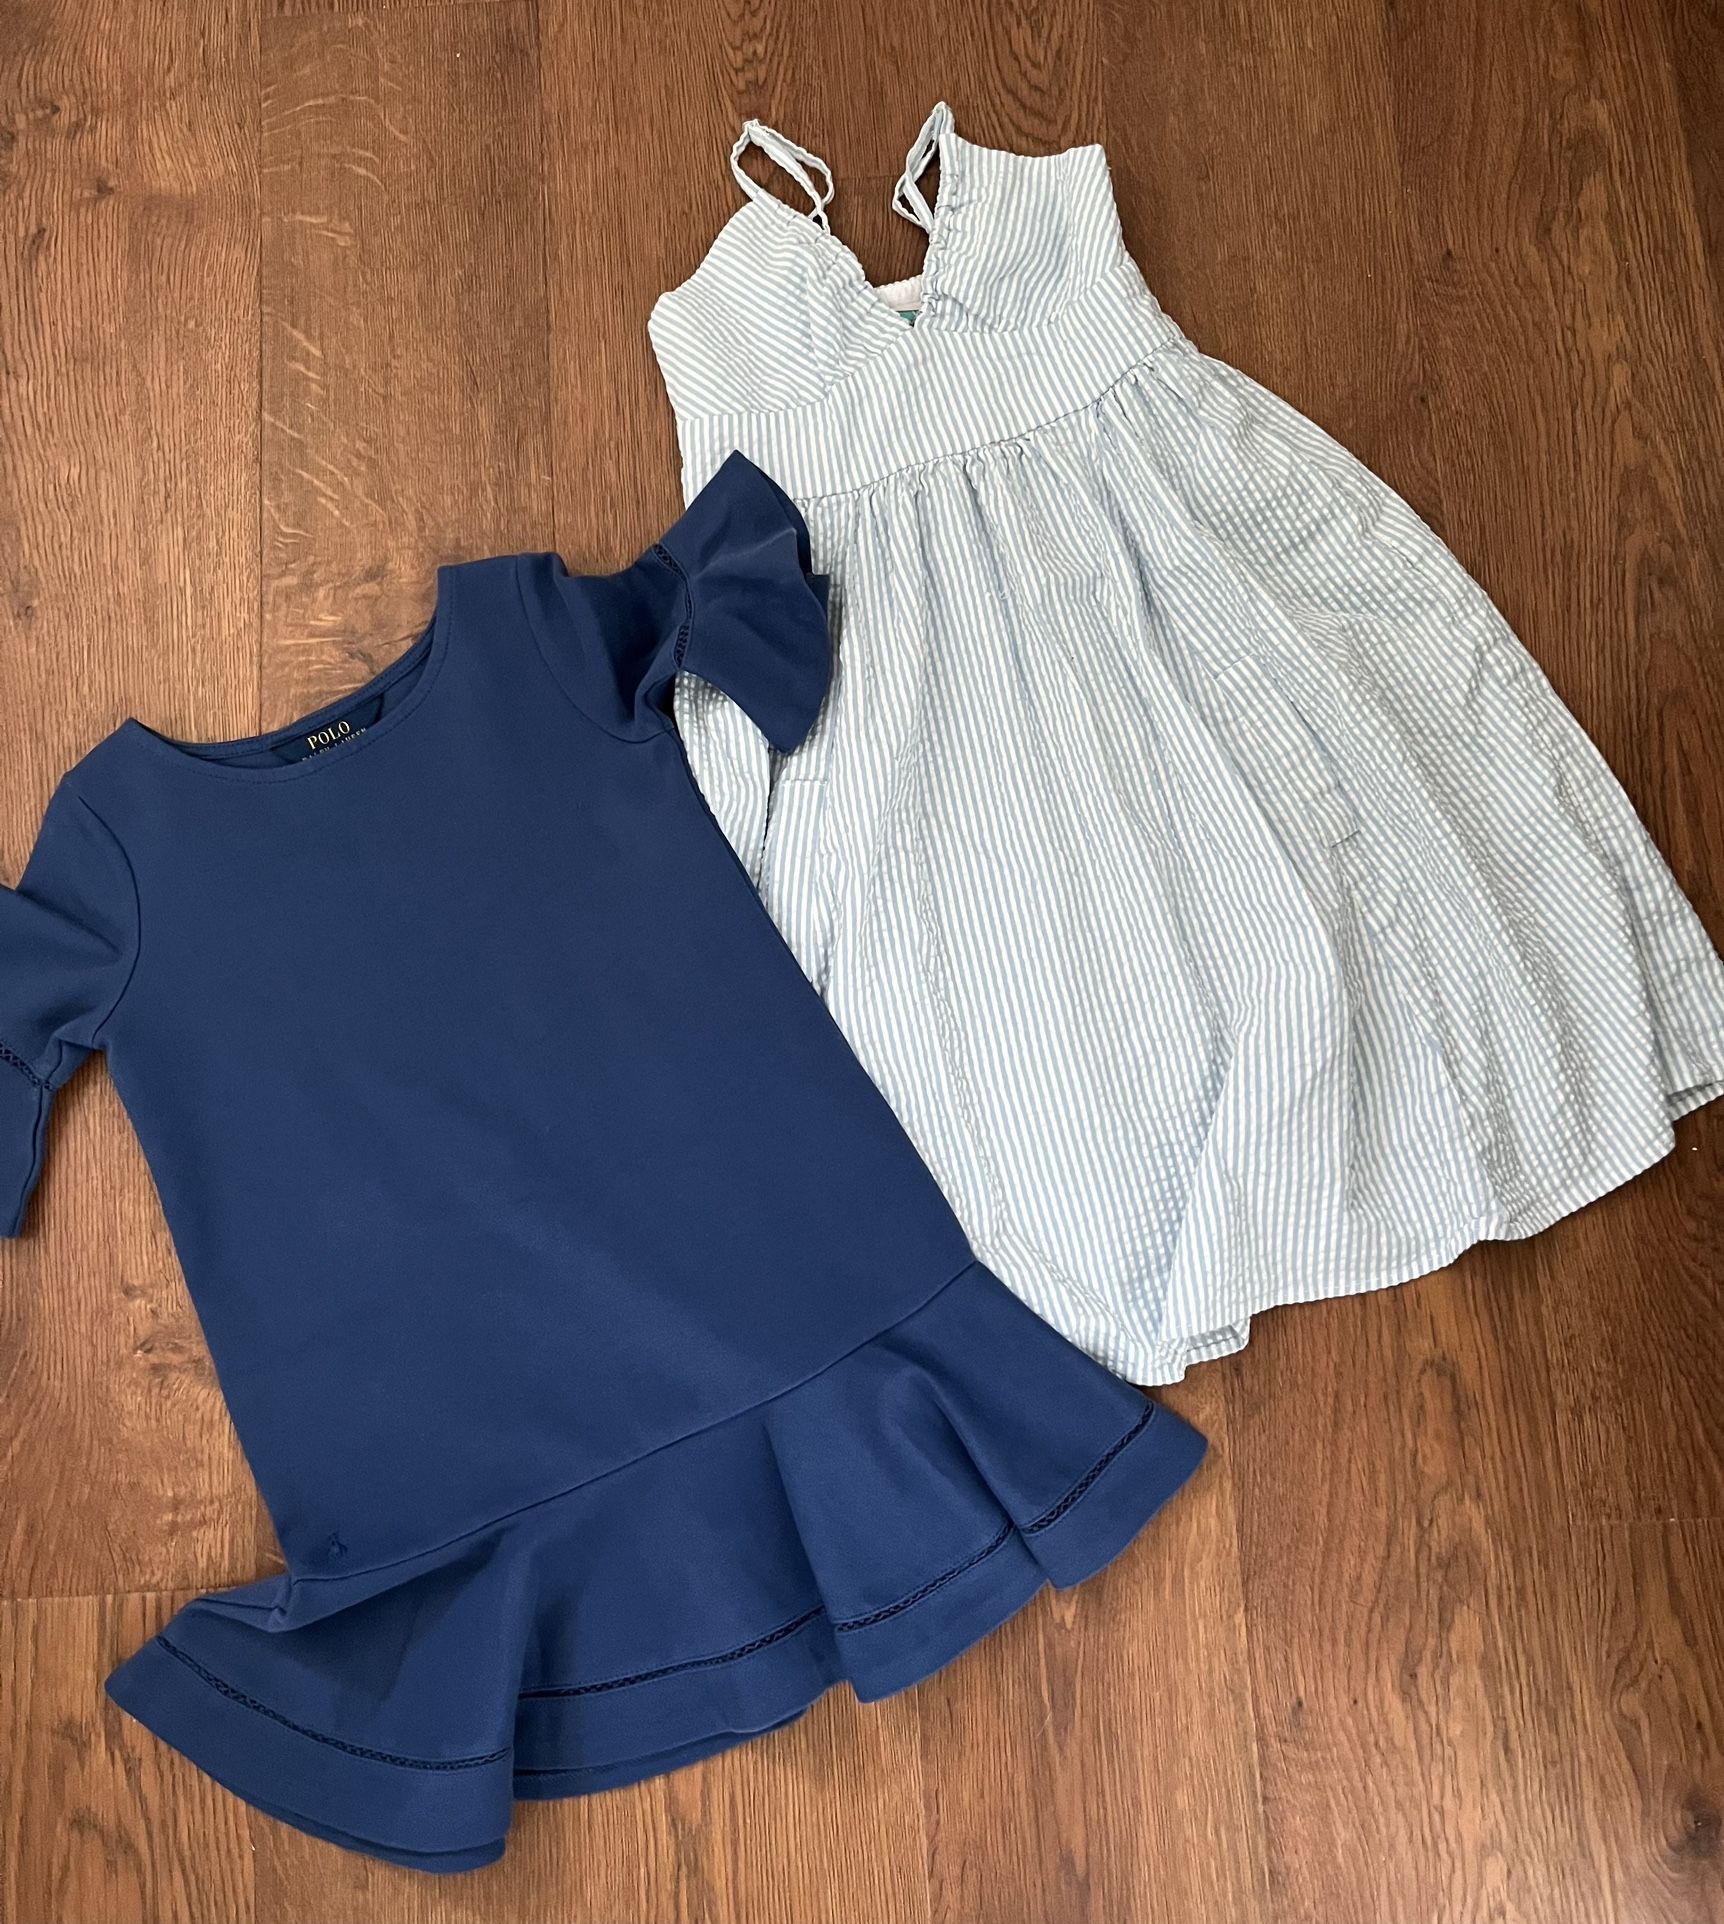 Polo Ralph Lauren dress and stripe dress size 6 bundle 